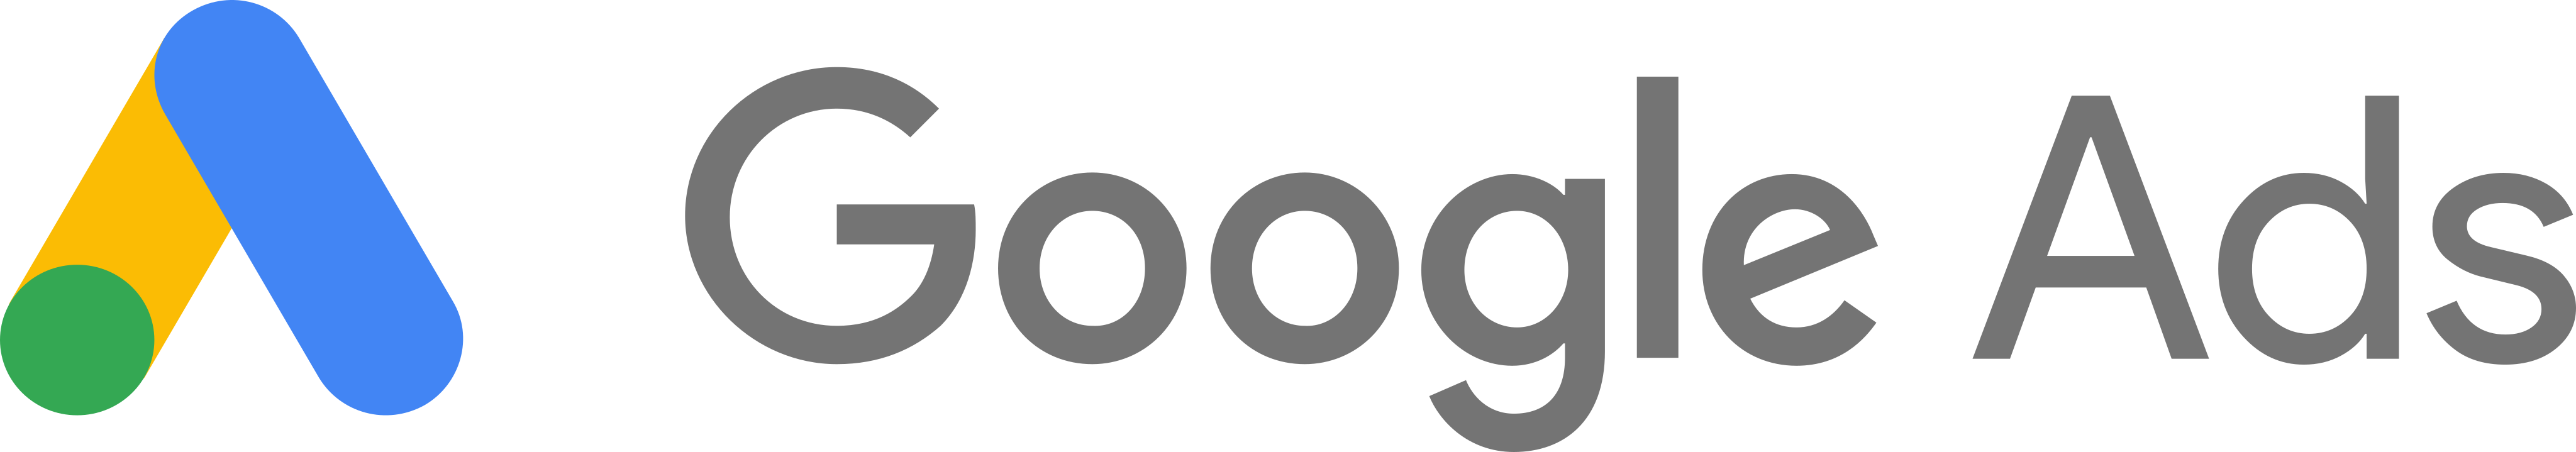 google adwords logo - Google Ads Logo